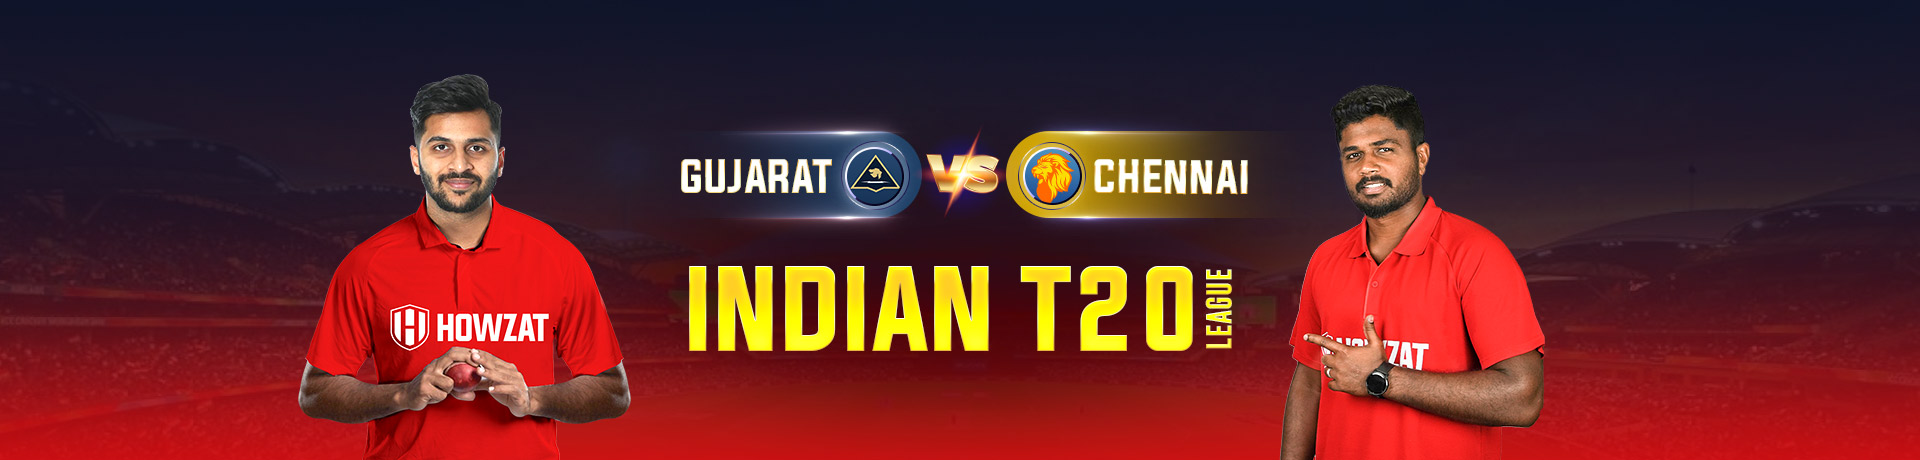 Chennai vs Gujarat